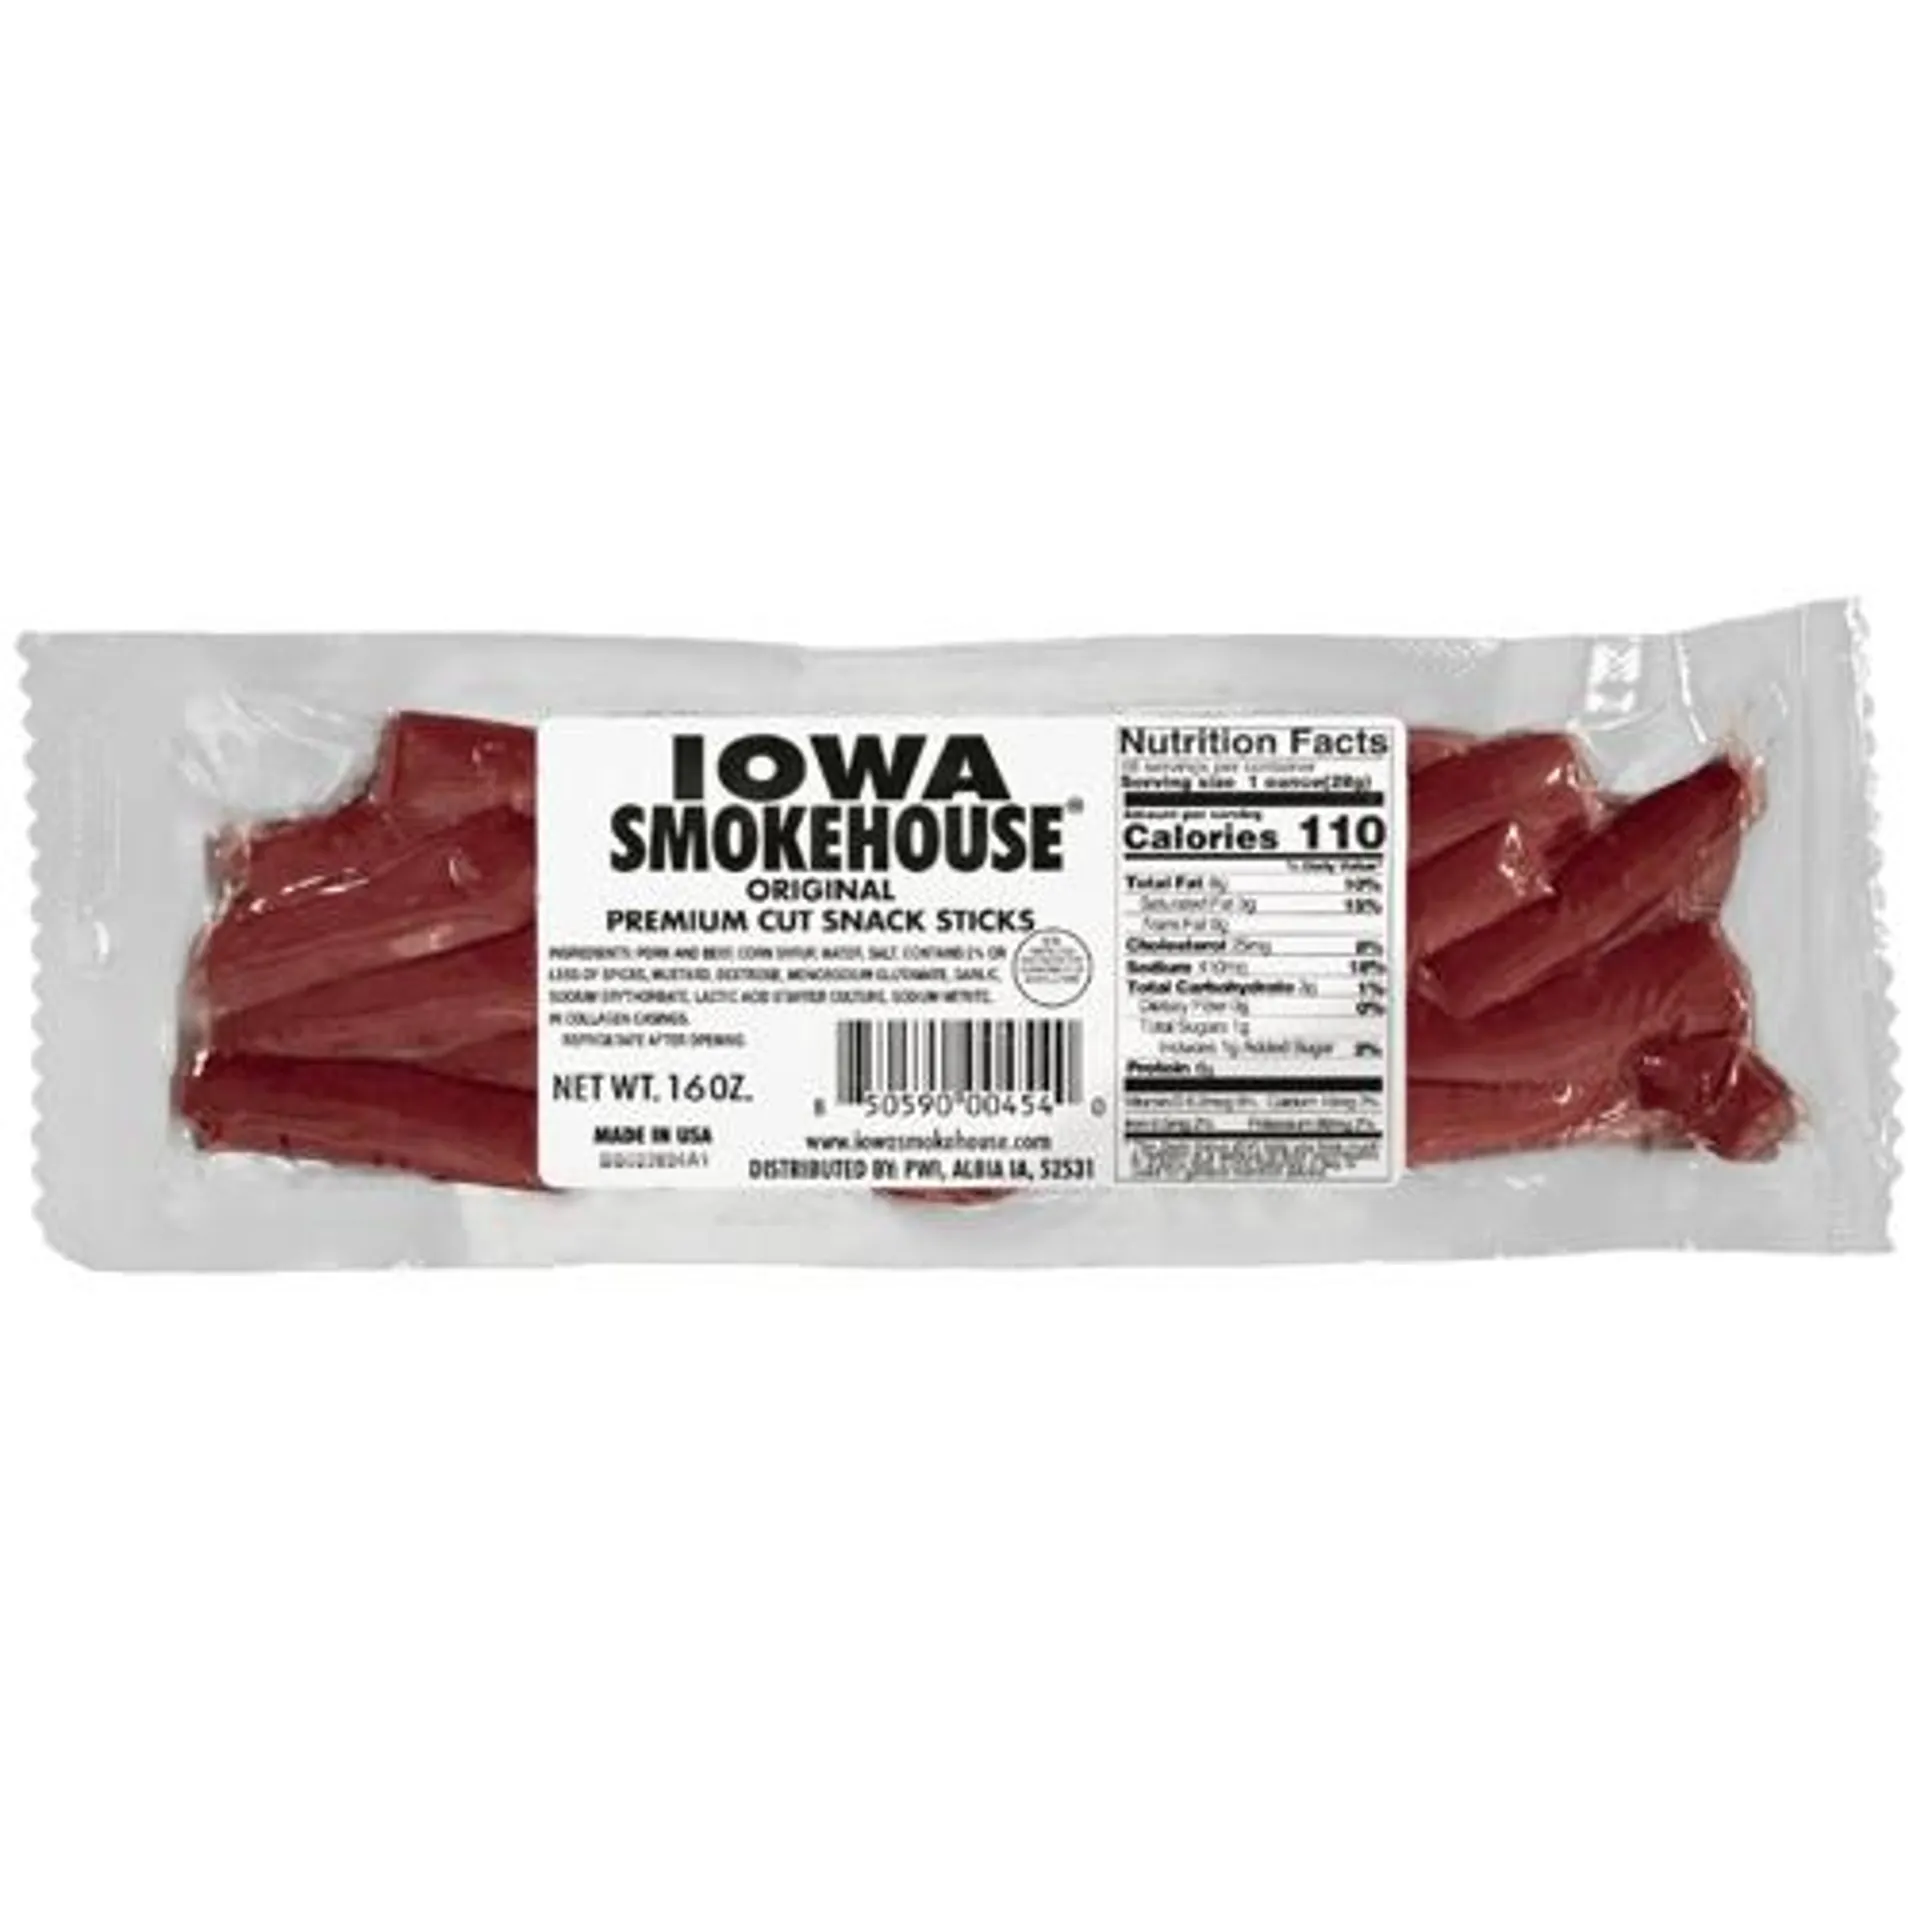 Iowa Smokehouse 16oz Original Premium Cut Snack Sticks